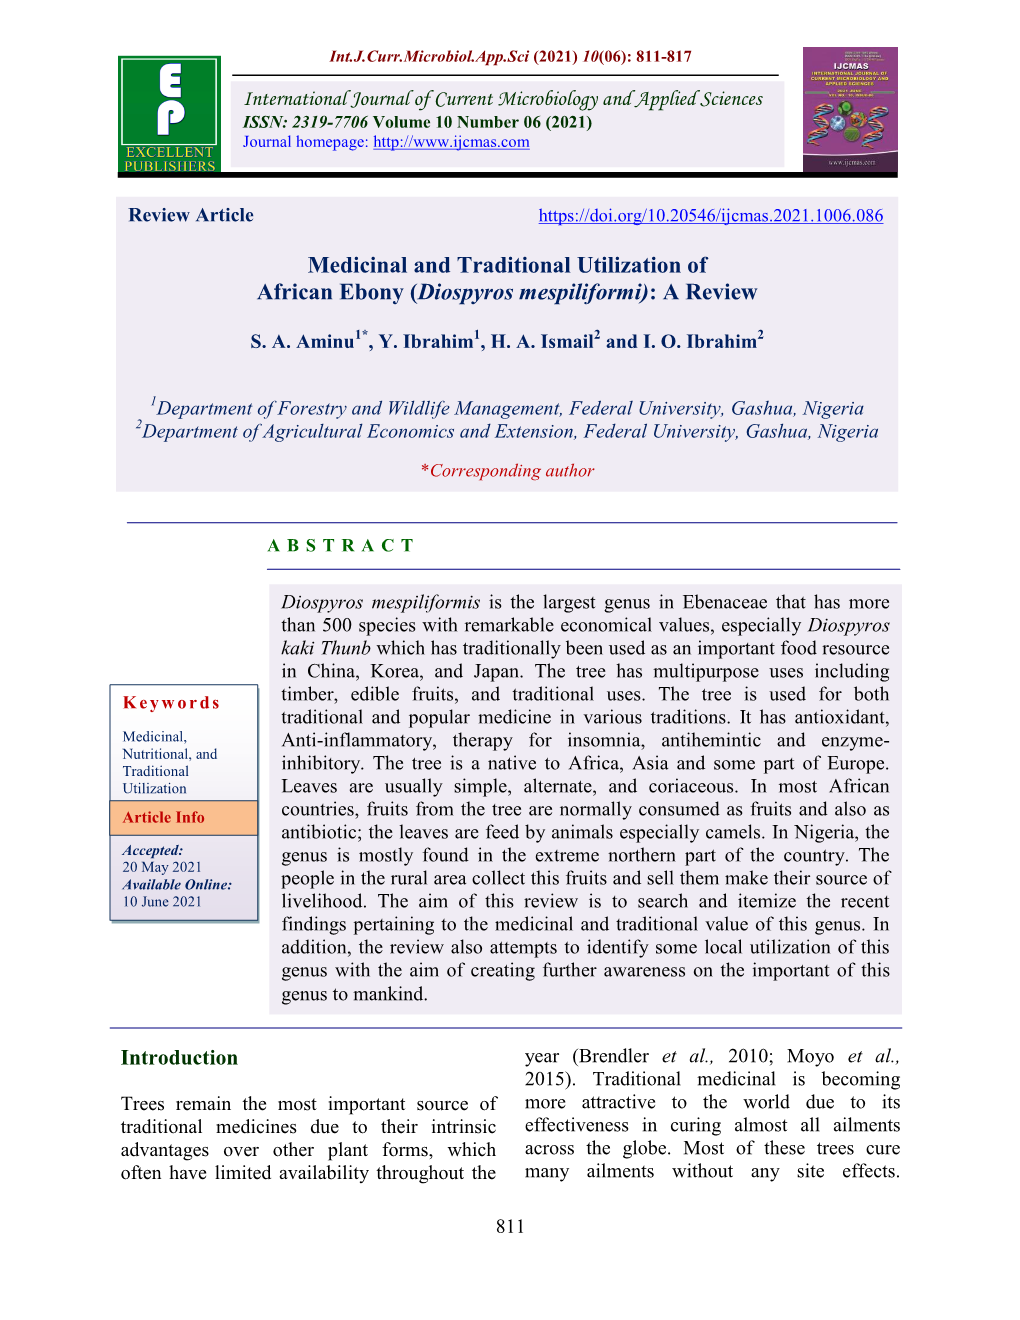 Medicinal and Traditional Utilization of African Ebony (Diospyros Mespiliformi): a Review